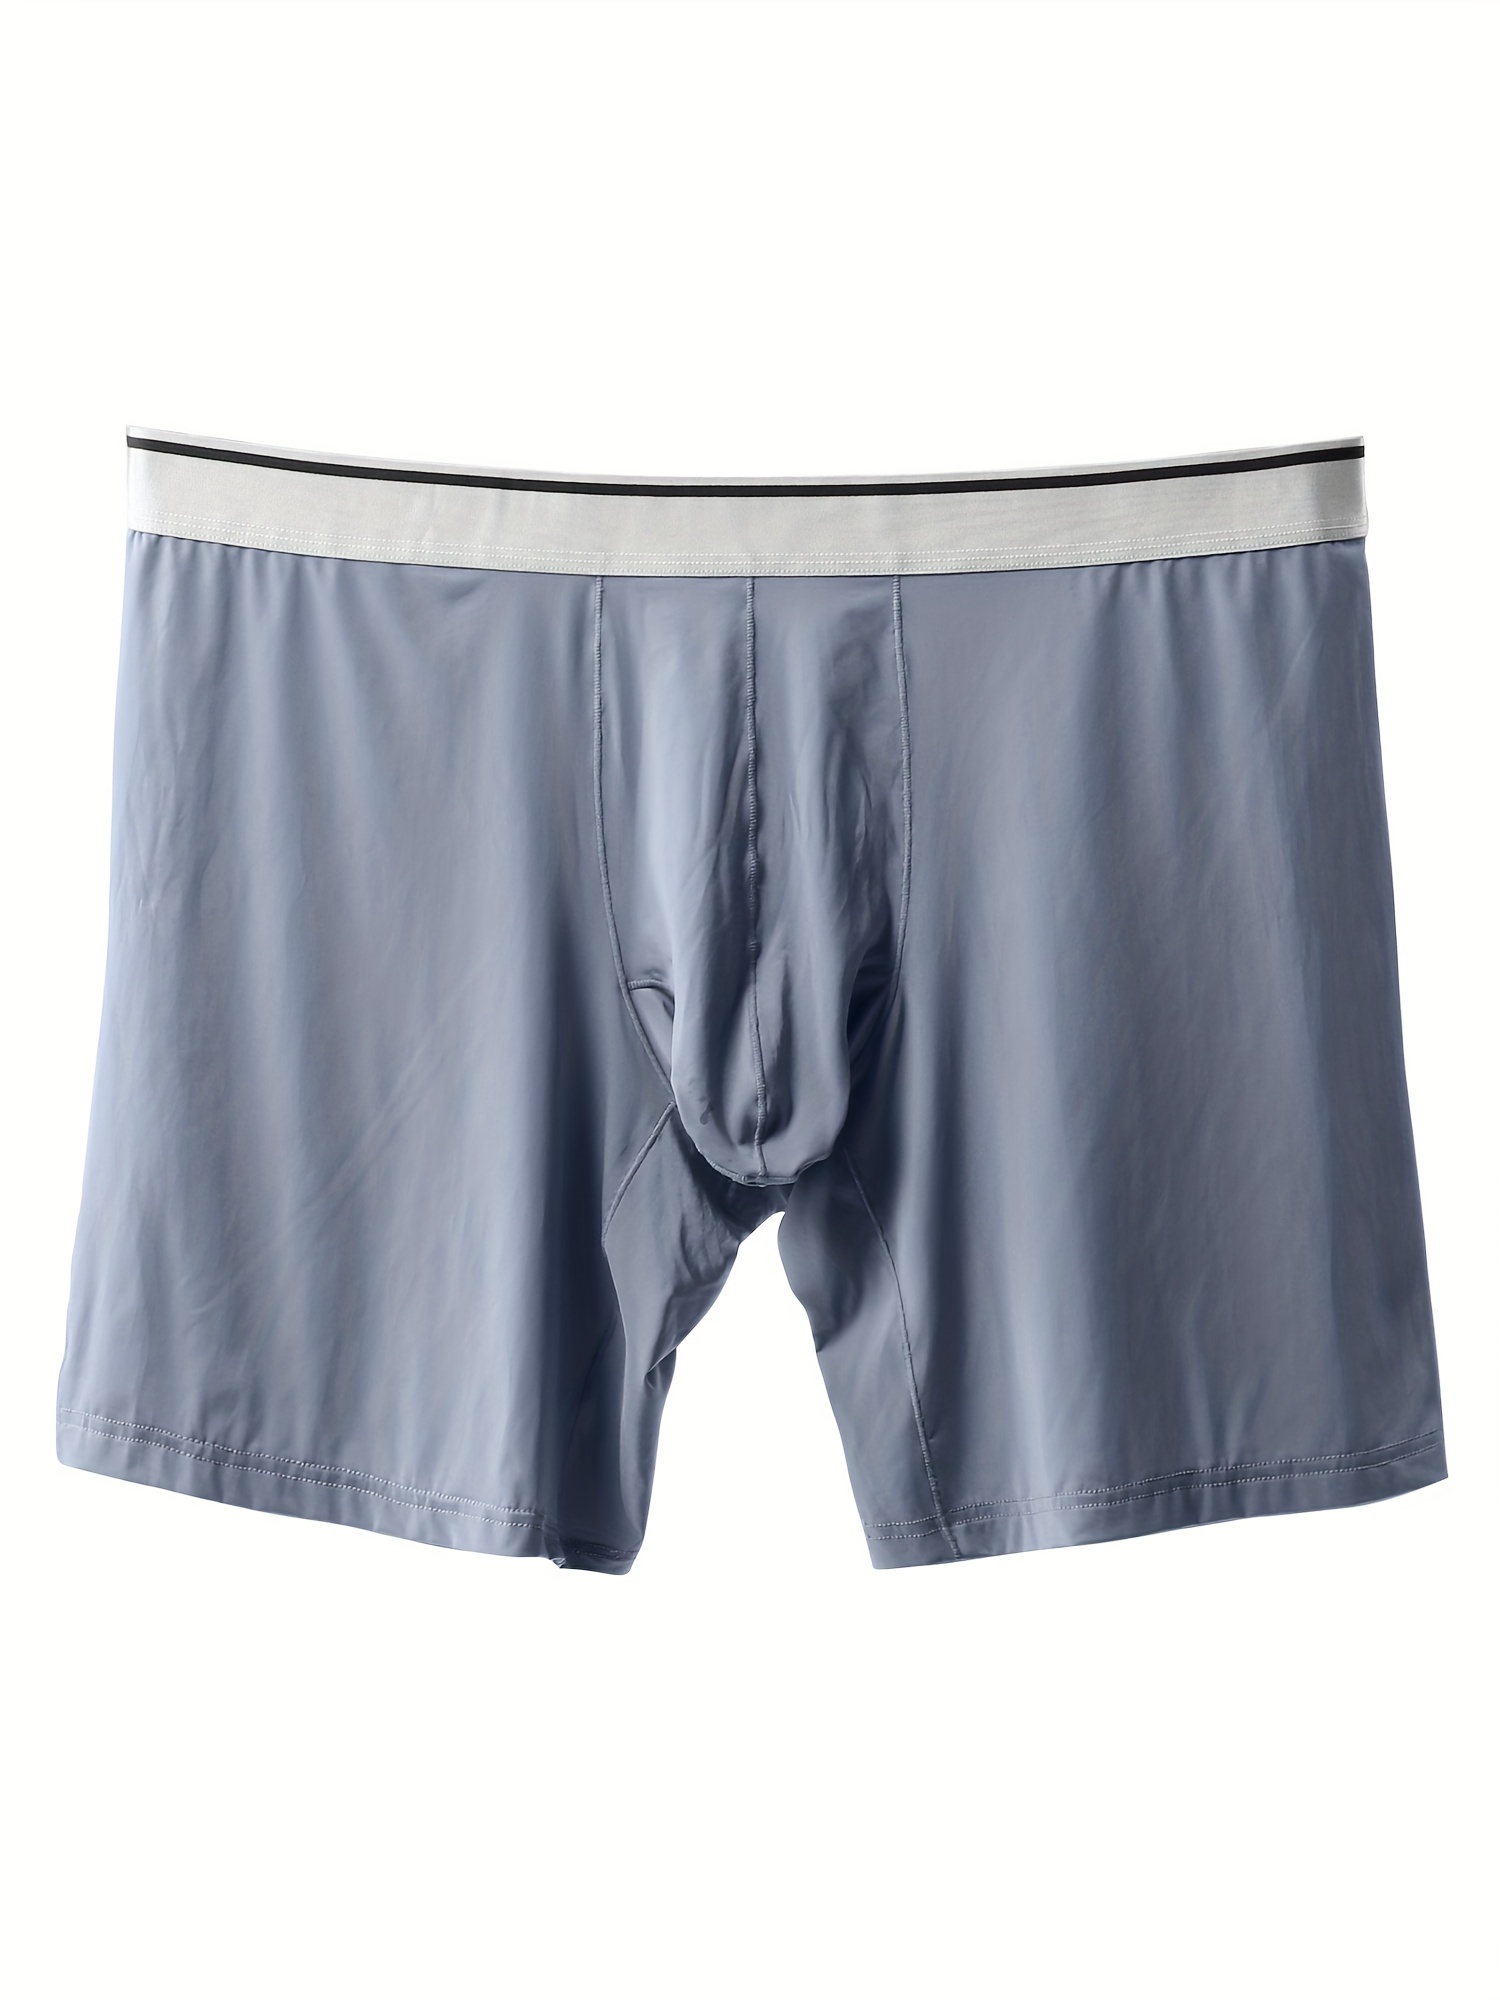 2pcs Men's Modal Sports Underwear Anti-Chafing Professional